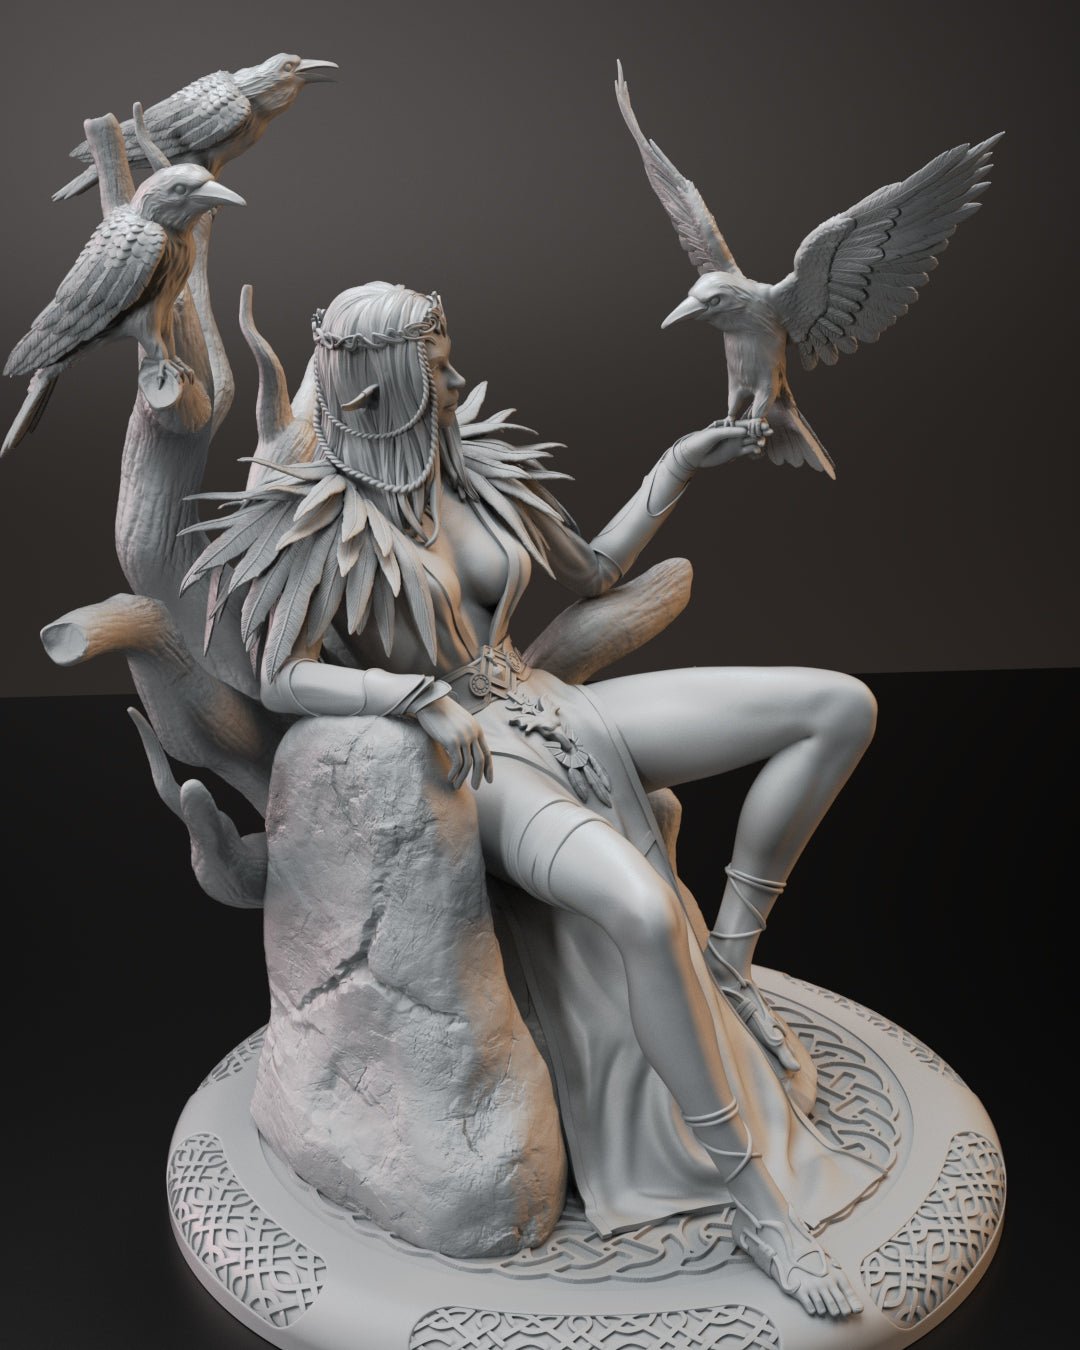 Branis Resin Scale Model | 3D Printed | Fun Art | Figurine by Gsculpt Art